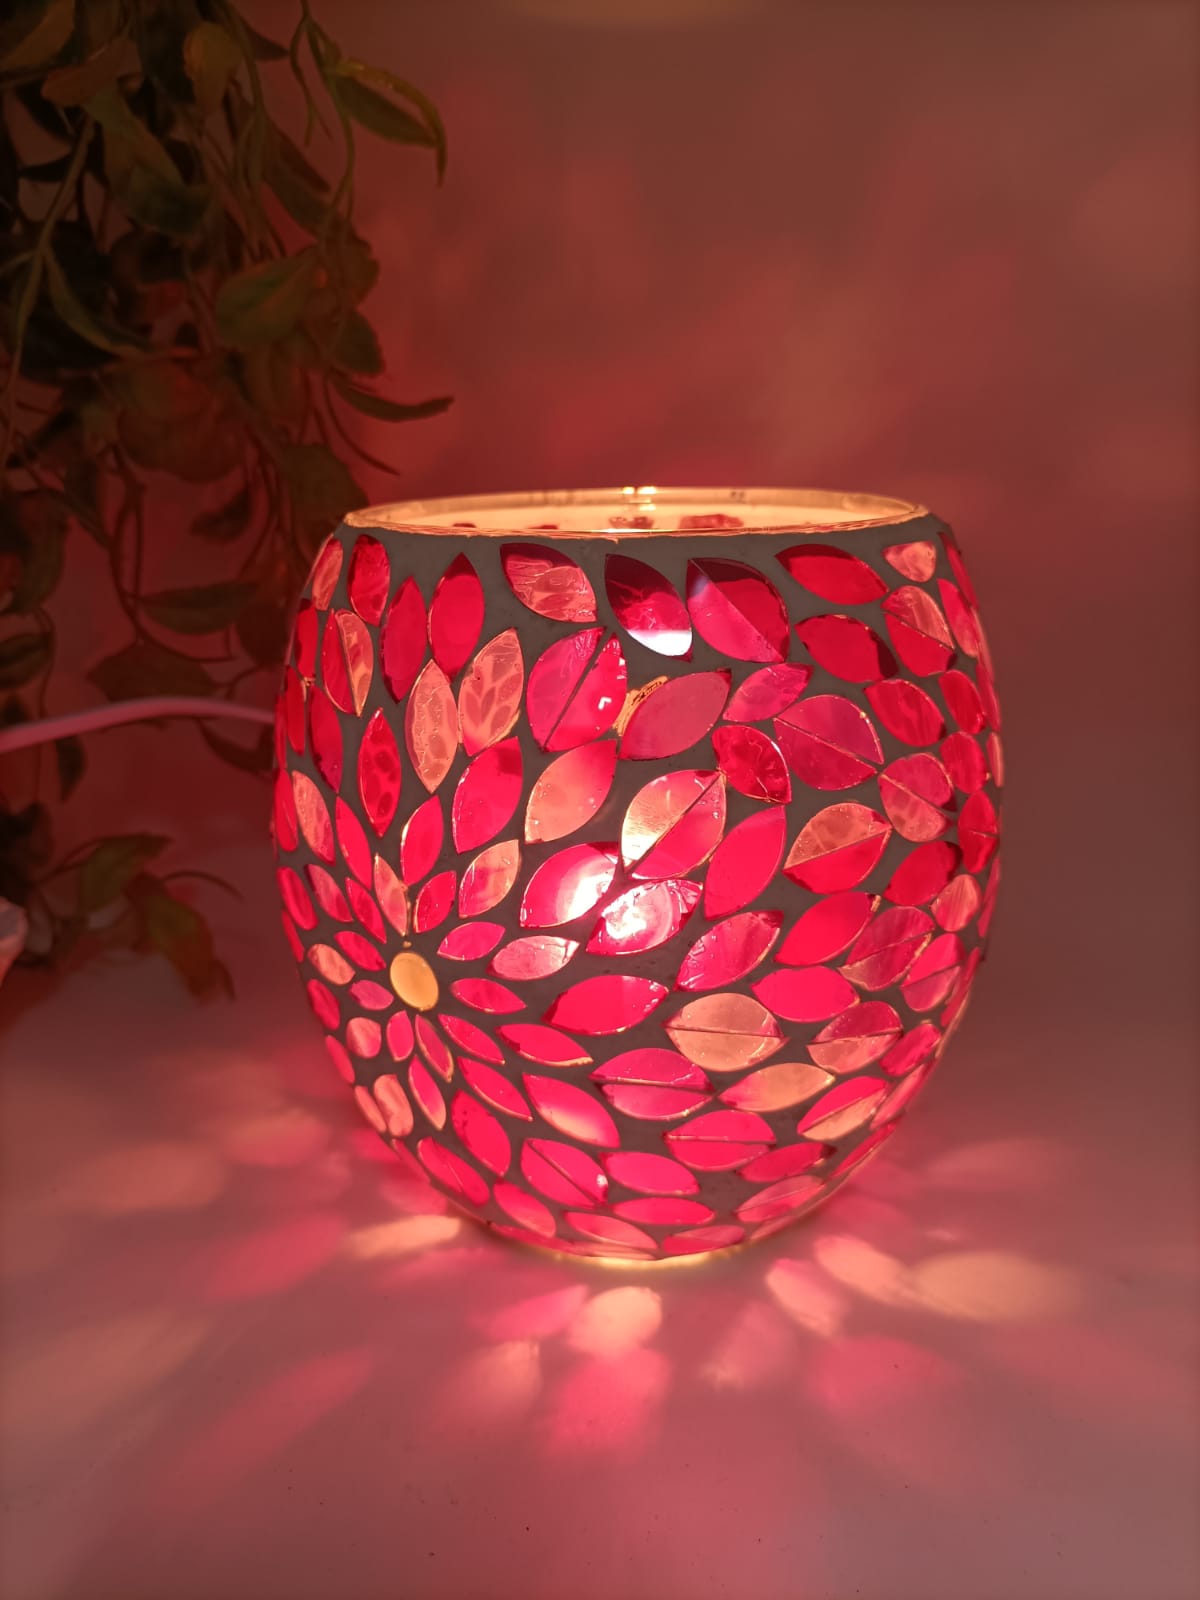 MOSAIC RED FLOWER VASE HIMALAYAN SALT LAMP Crystal Wellness